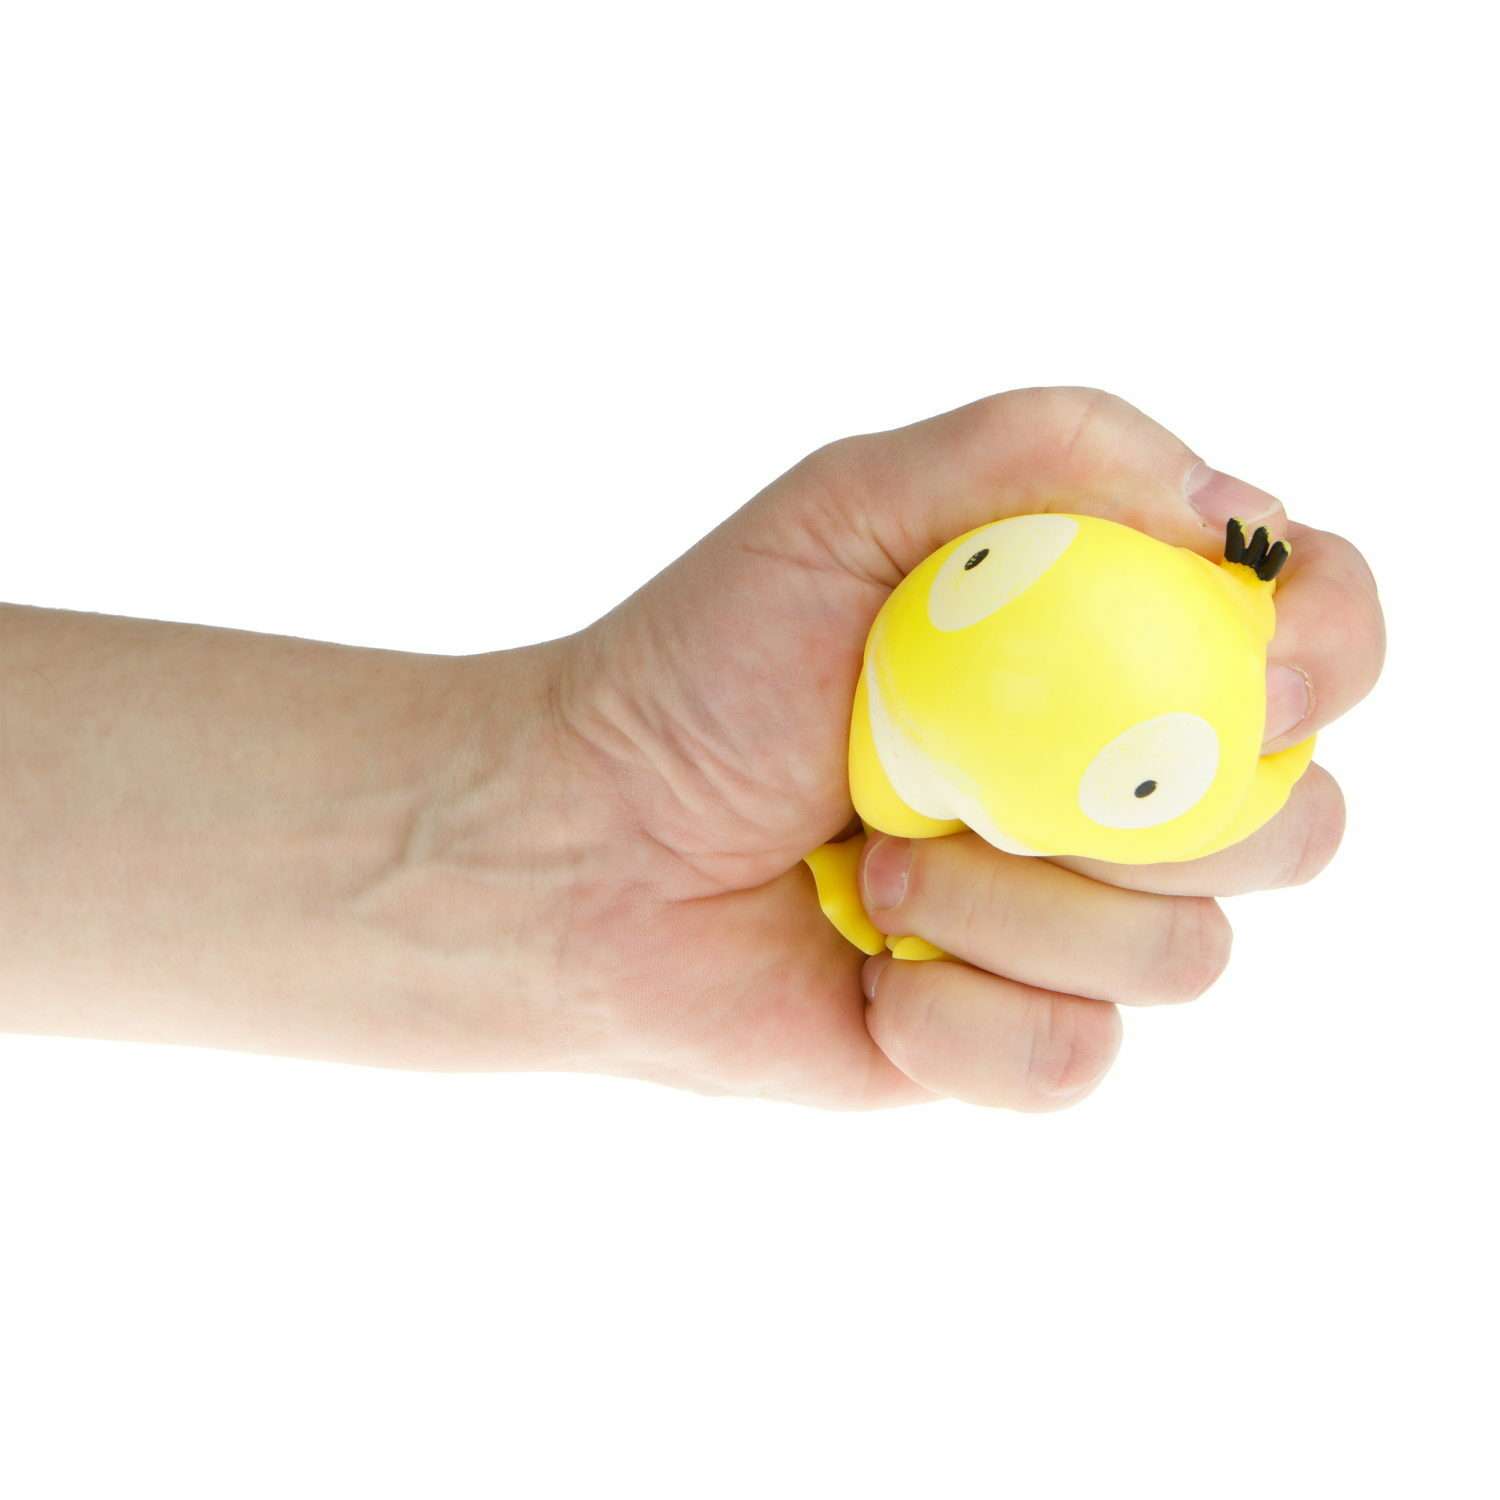 Мяч антистресс для рук Крутой замес 1TOY утка жёлтая жмякалка мялка тянучка 1 шт - фото 2